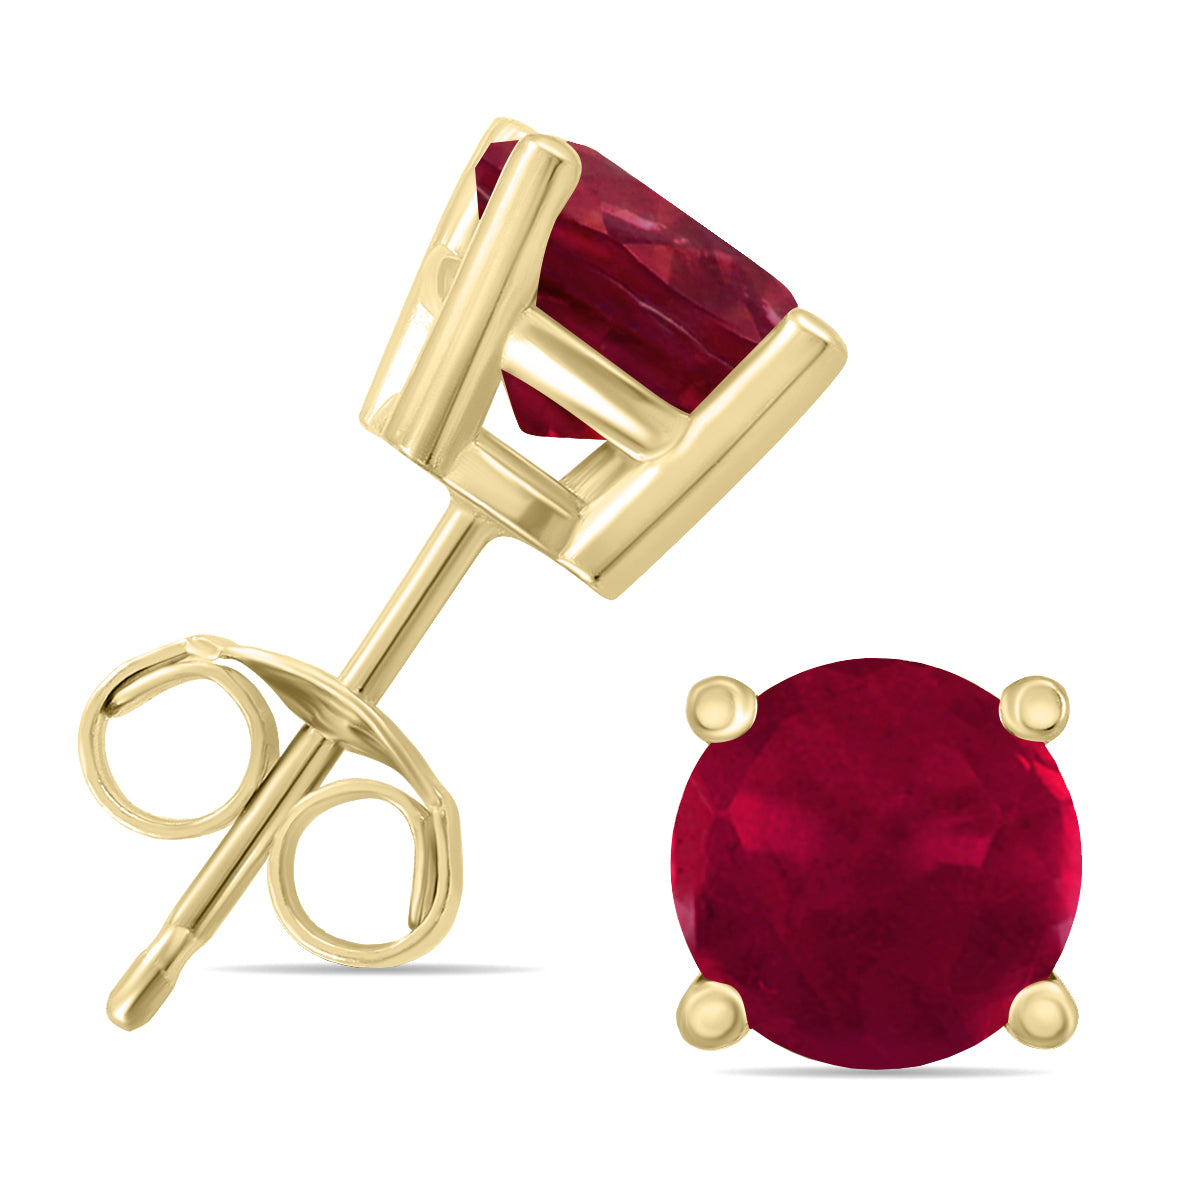 Sselects 14k 5mm Round Ruby Earrings In Burgundy